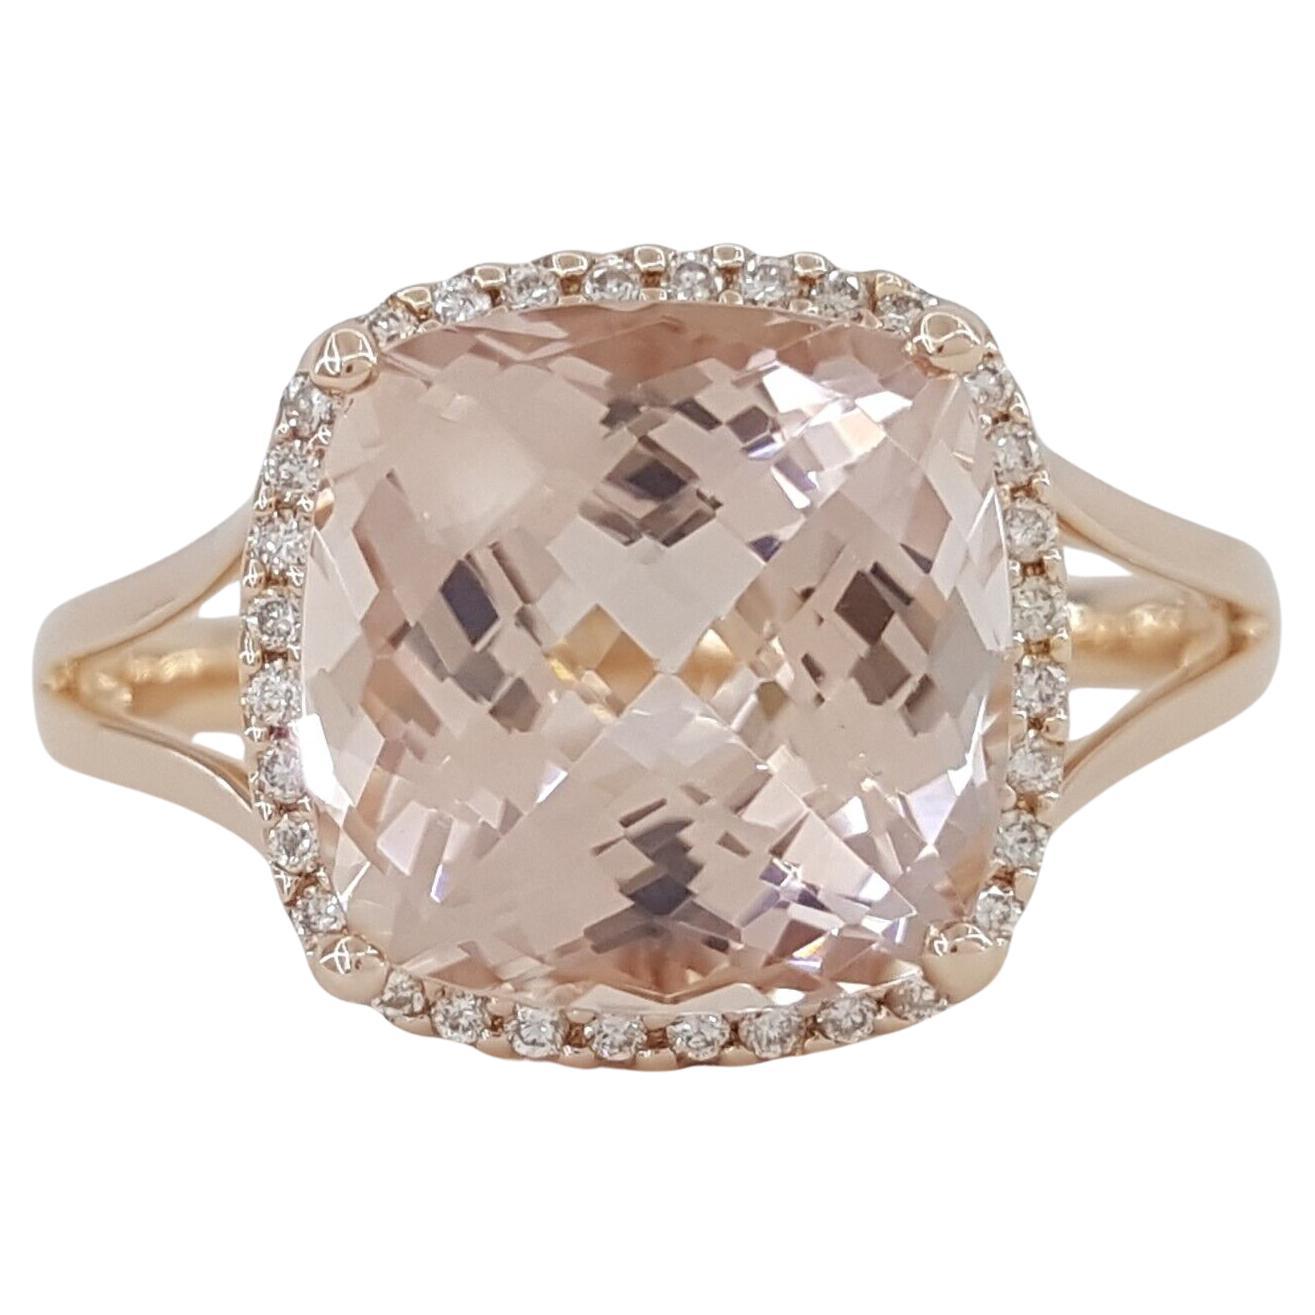 Bague en or rose 14 carats avec Morganite rose de 4,56 carats et diamants ronds